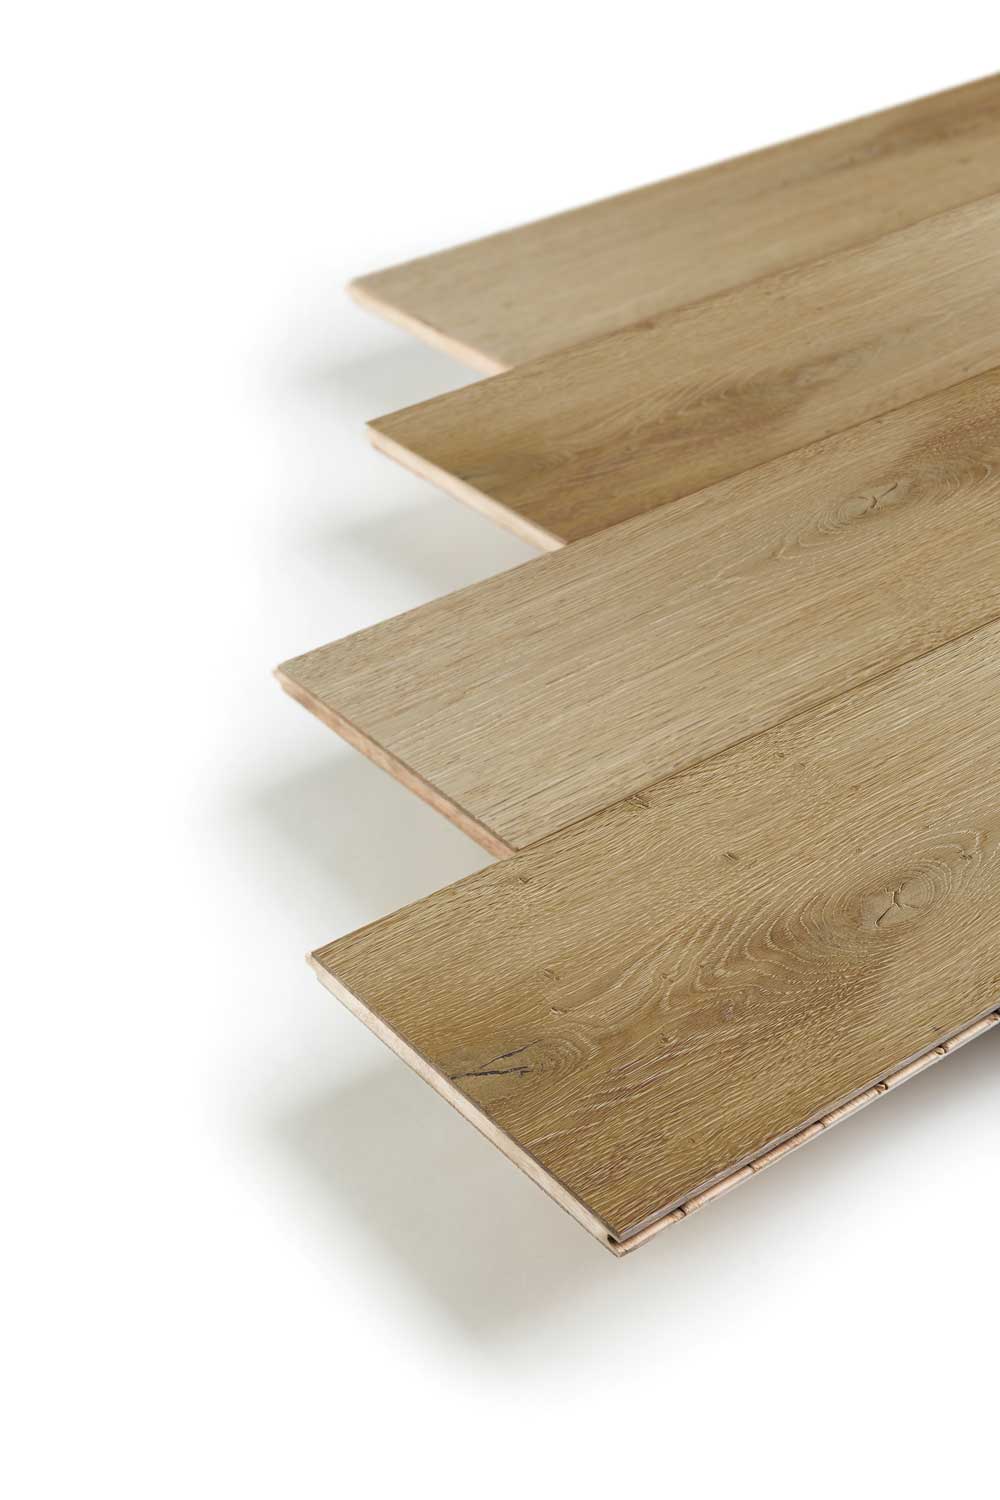 NEW Fulham 190 Mix Detail - Engineered Wood